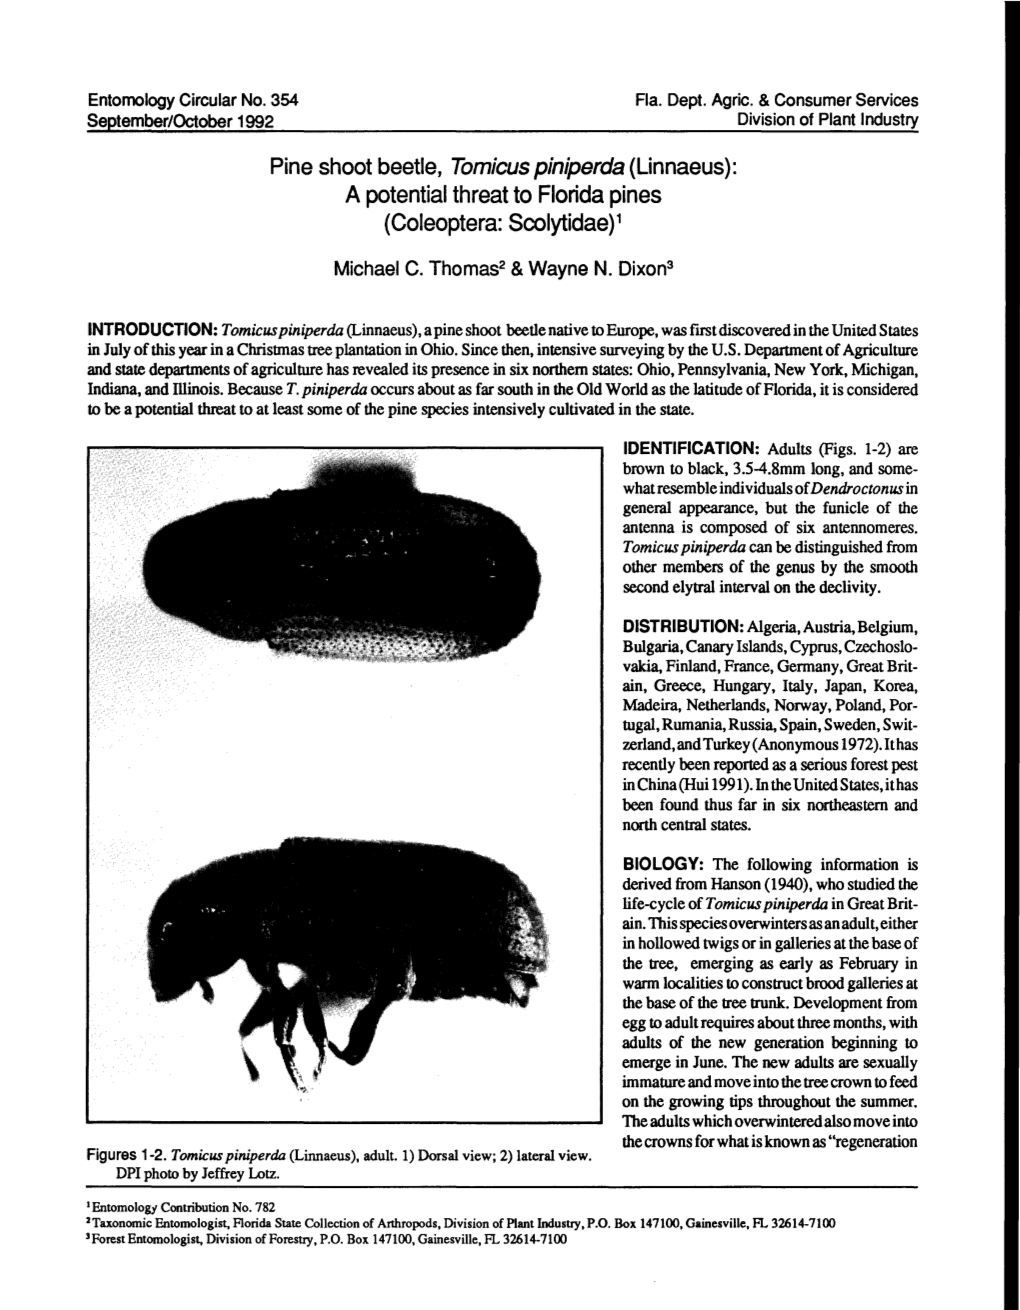 Pine Shoot Beetle, Tomicus Piniperda (Linnaeus): a Potential Threat to Florida Pines (Coleoptera: Scolytidae) 1